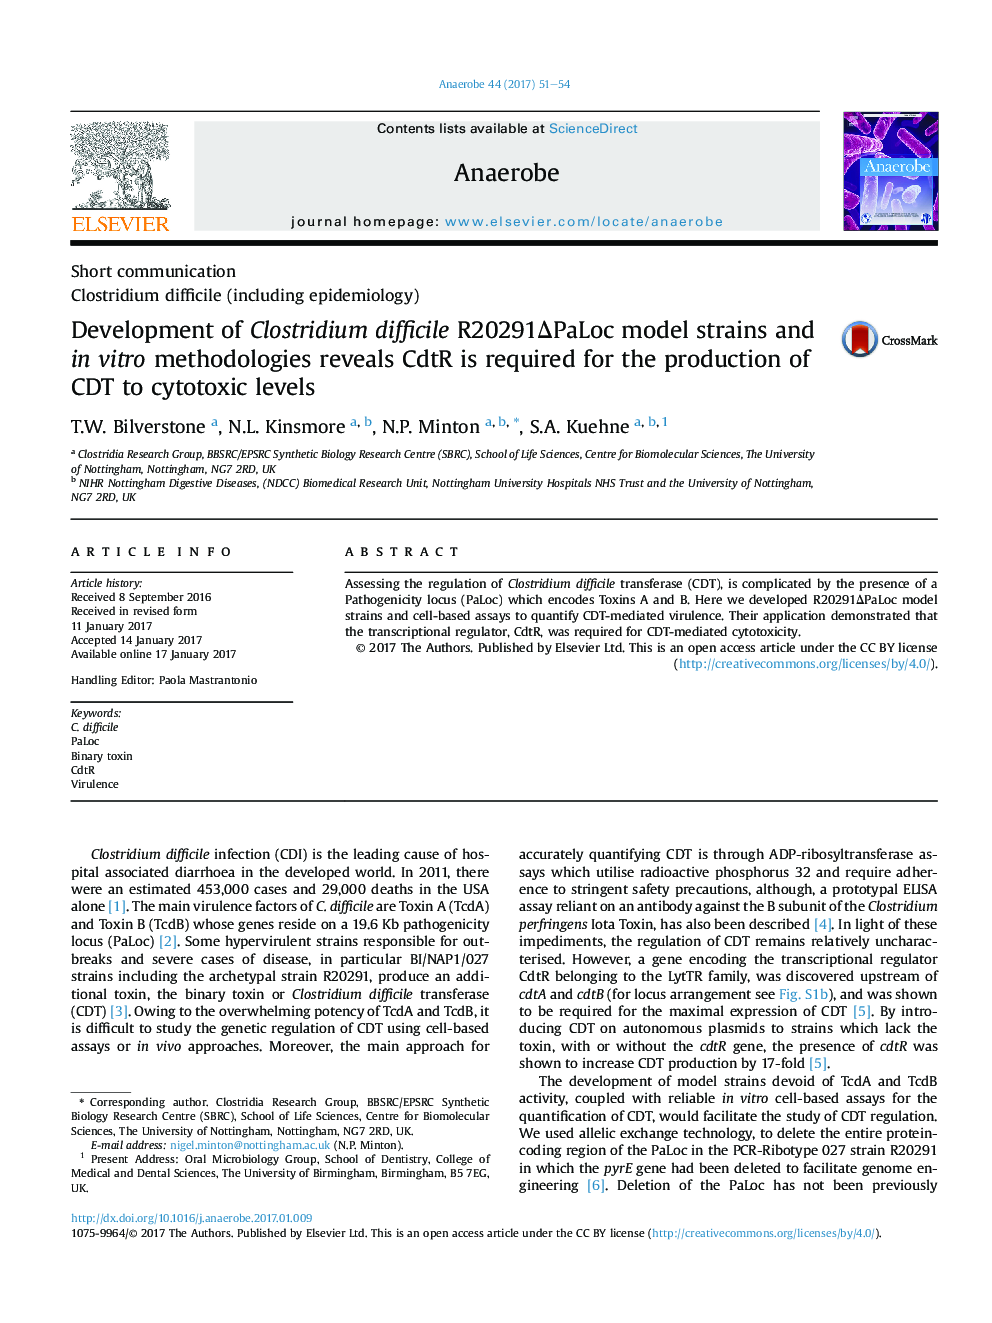 Development of Clostridium difficile R20291ÎPaLoc model strains and inÂ vitro methodologies reveals CdtR is required for the production of CDT to cytotoxic levels